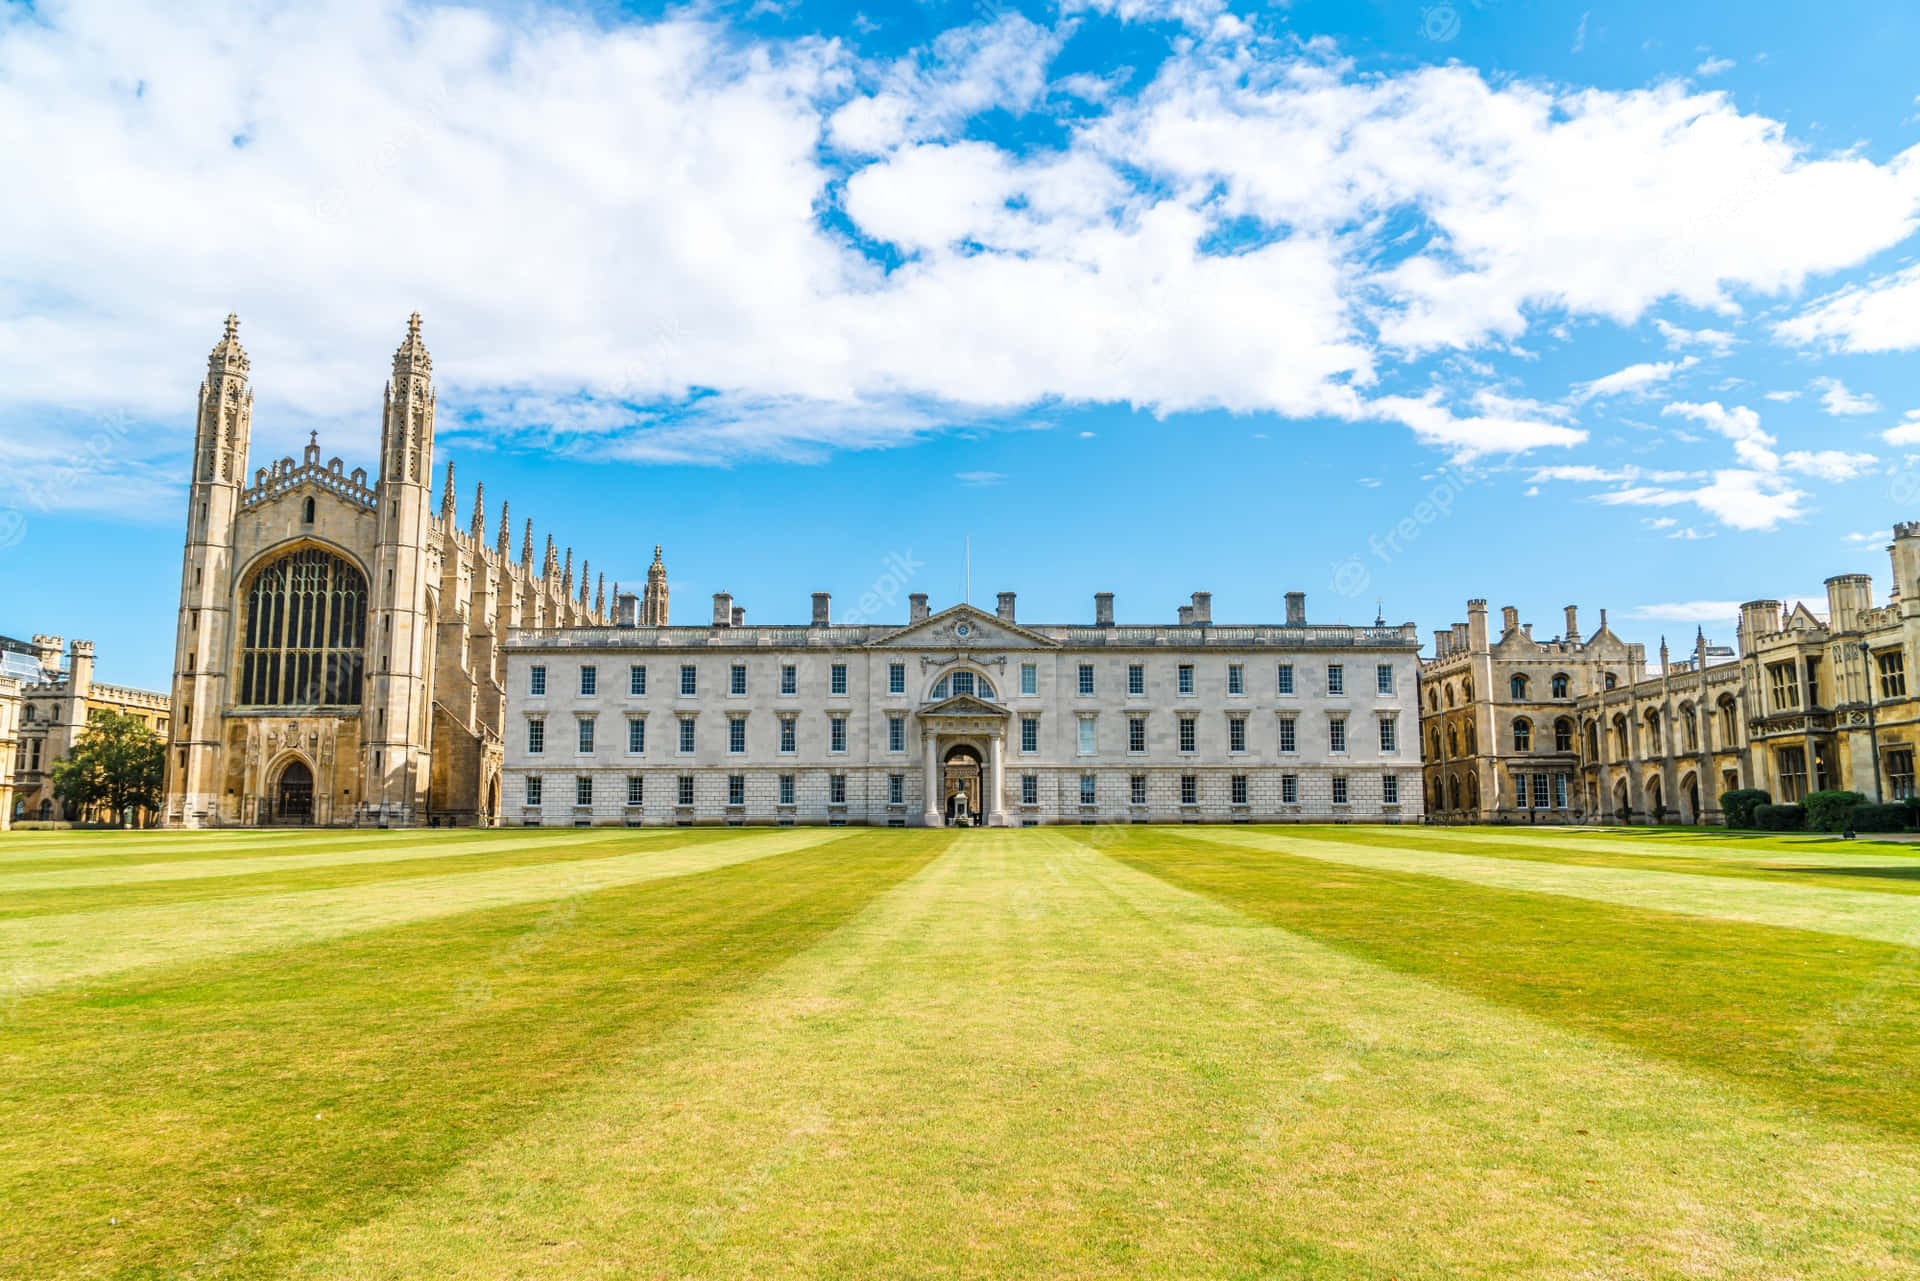 Scenery af King's College Cambridge University. Wallpaper